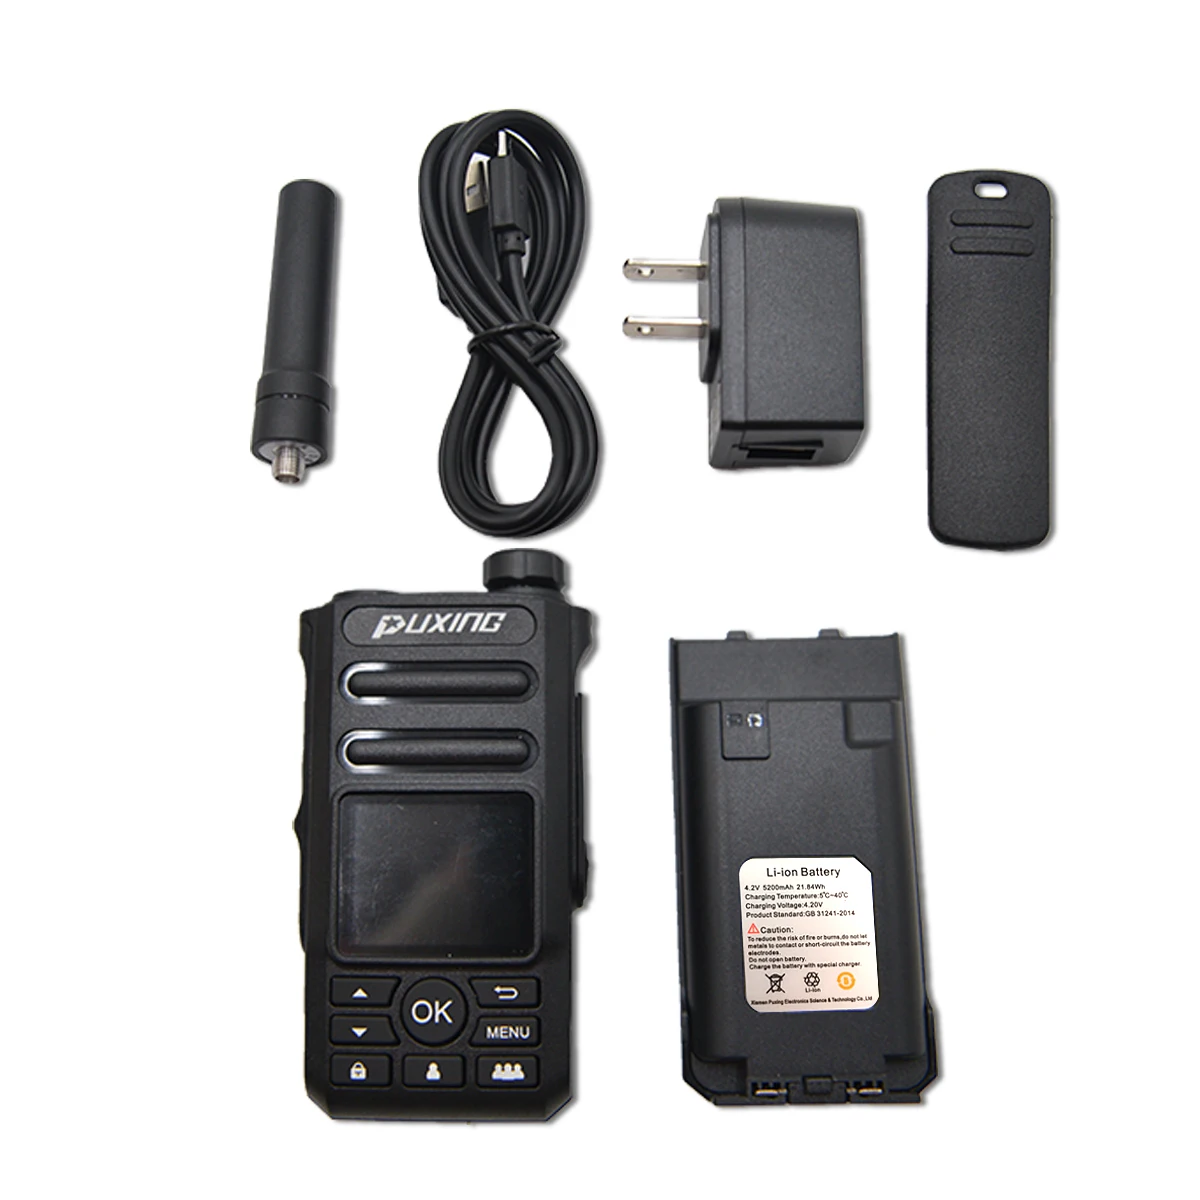 Portable walkie talkie radio comunicador 4G LTE/3G/2G police IP radio GPS wifi Android рация profesional 1000km policia enlarge